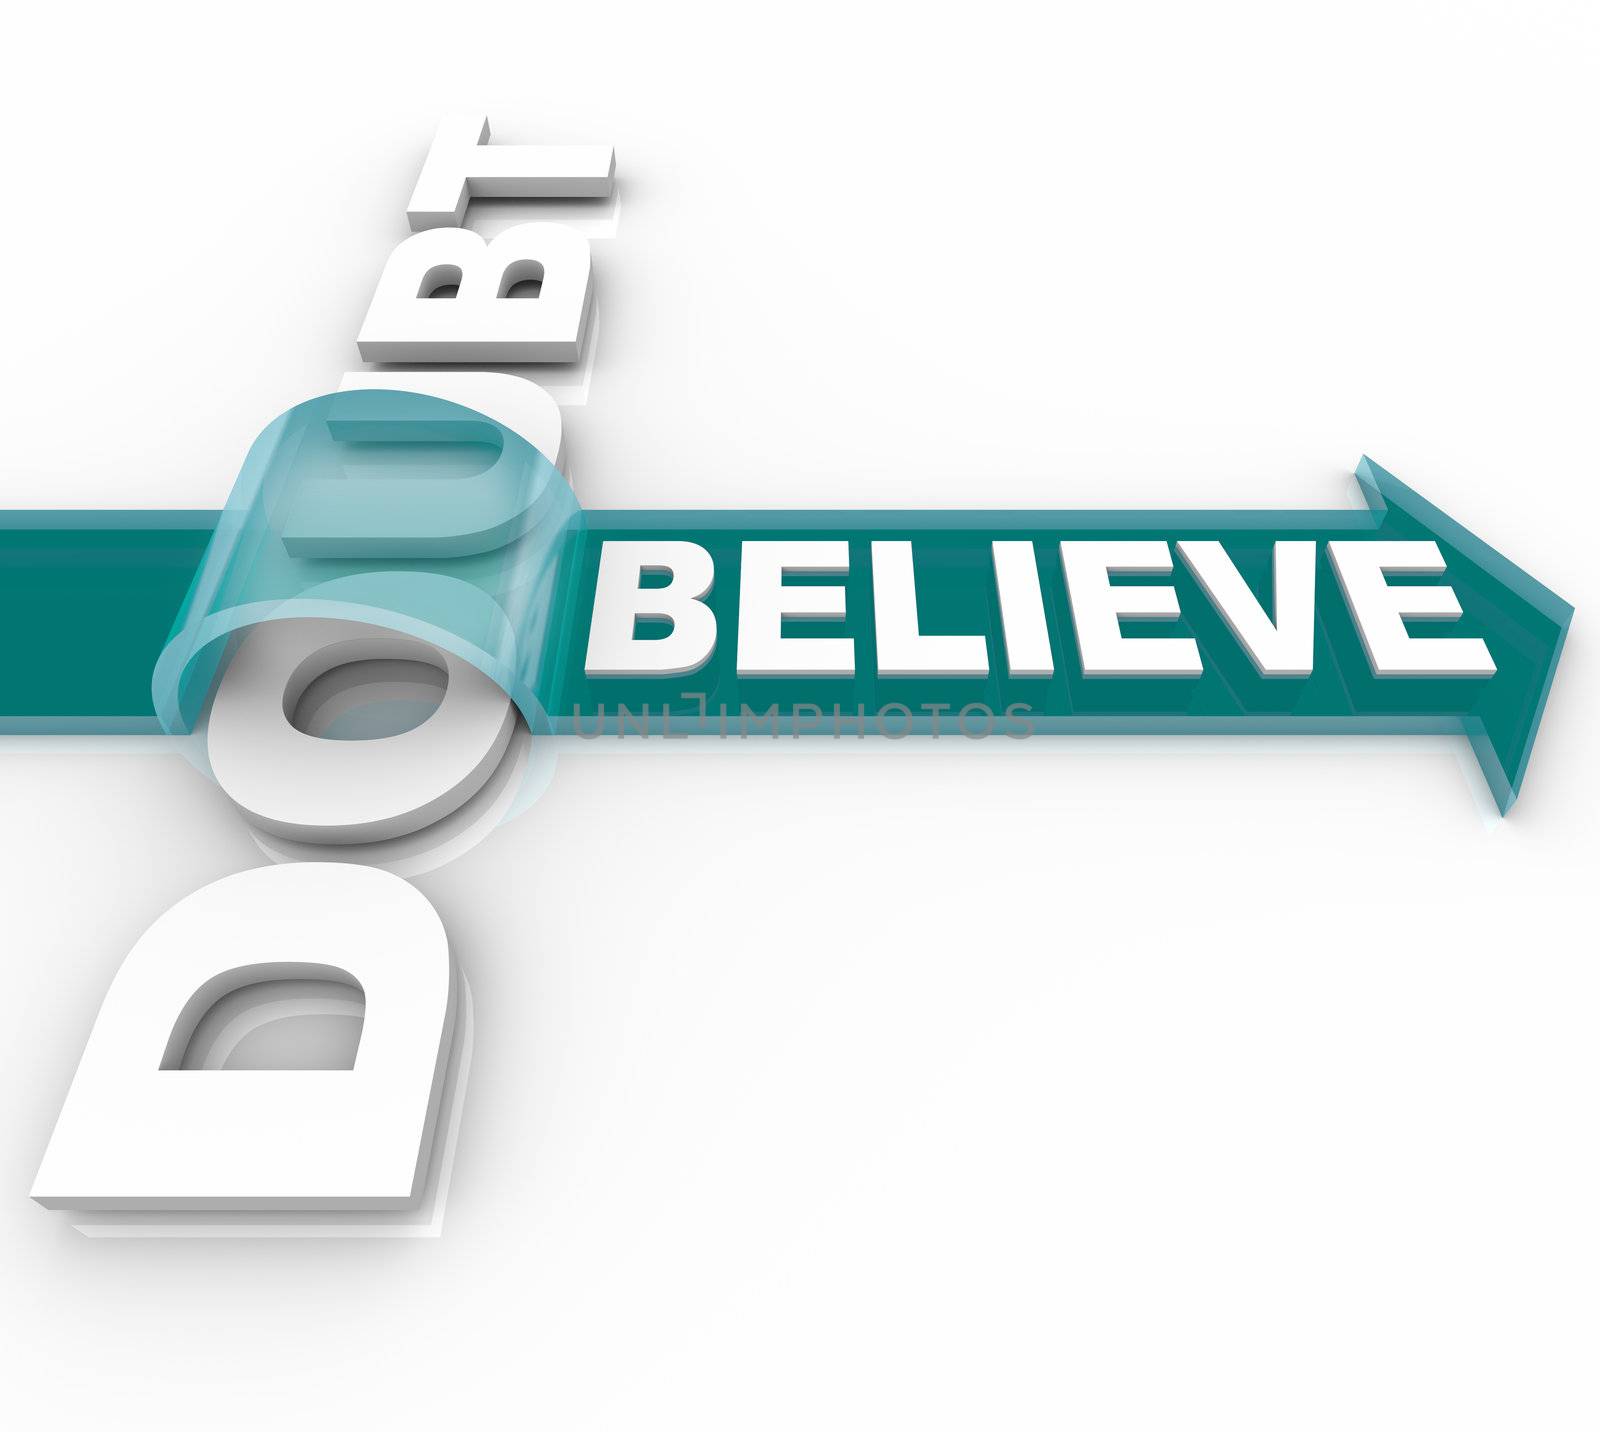 Belief Triumphs Over Doubt - Believe in Success by iQoncept